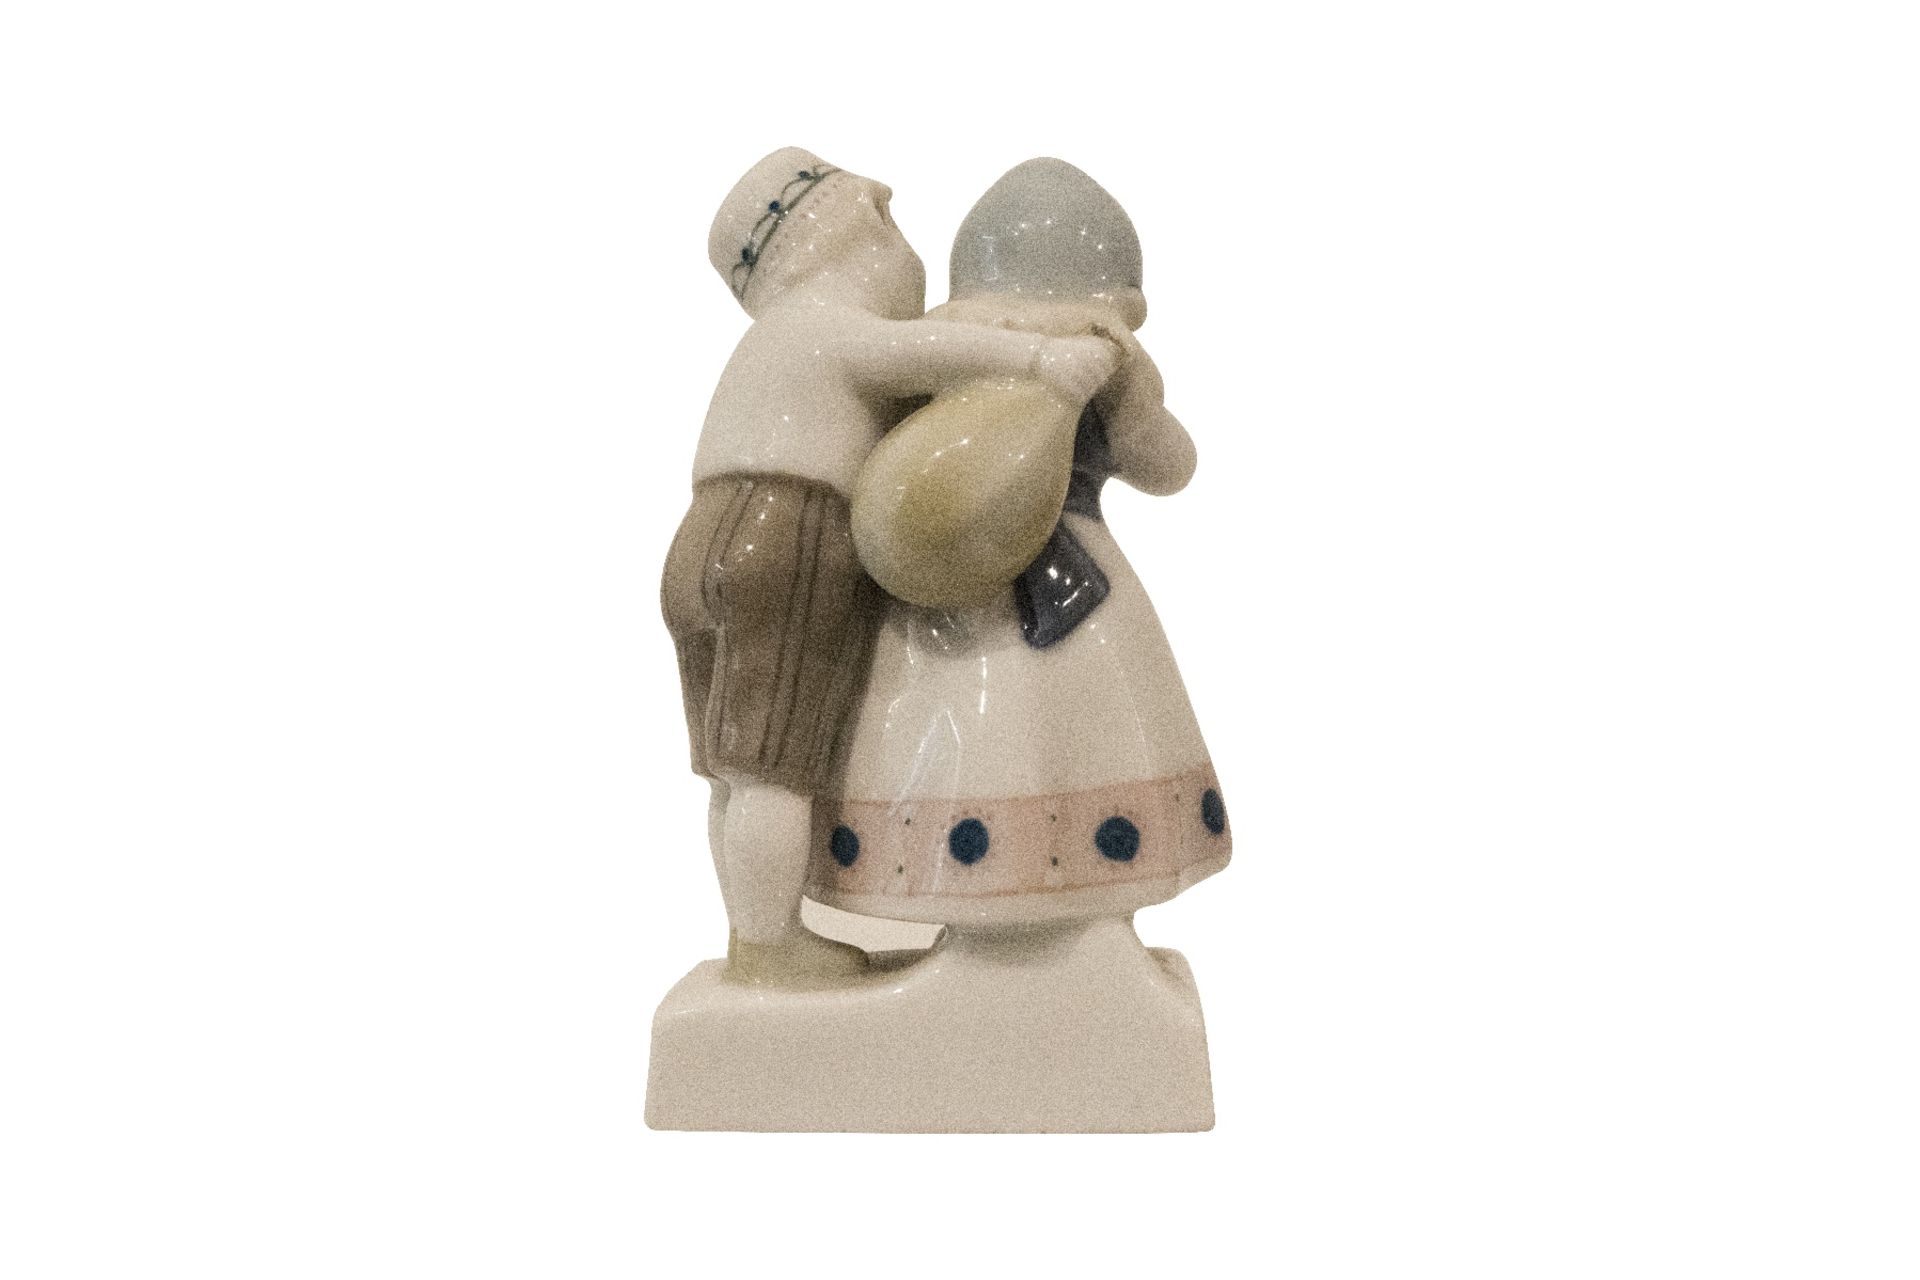 Porzellanmanufaktur Goebel Erste Liebe | Goebel Porcelain Manufa ctory First Love - Bild 3 aus 5